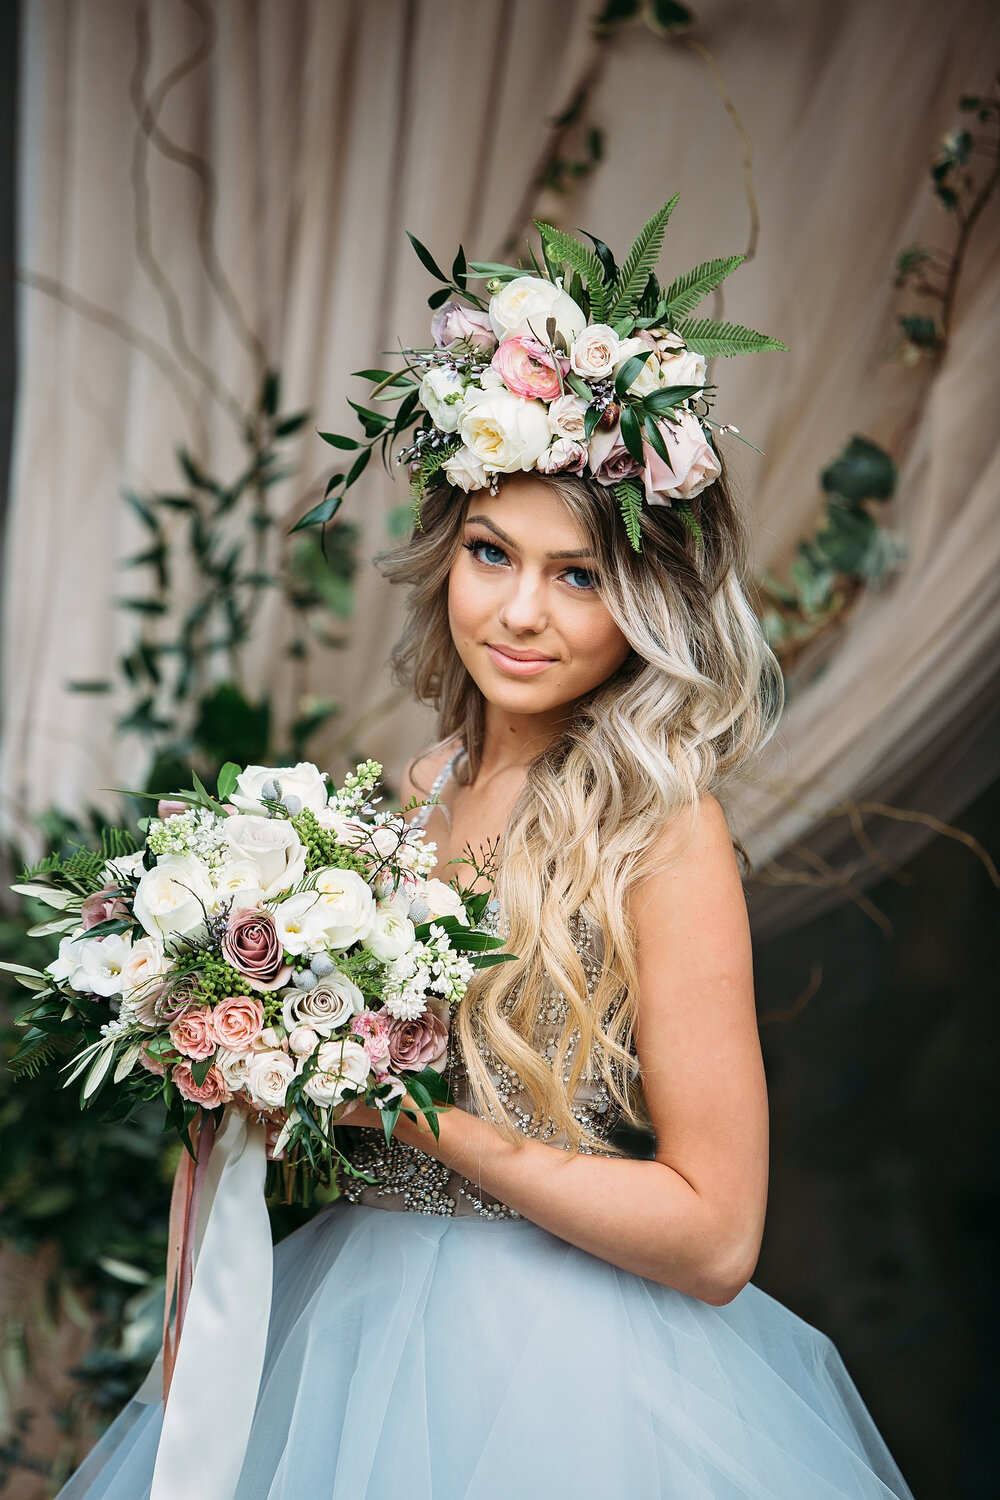 luxury-wedding-bridal-bouquet-headpiece-details-garden-rose-lilac-lavender-greenery-flowing-ribbon-blushes-whites-upscale-inspiration-northern-california-sonoma-v-sattui-florist-design-violette-fleurs-anna-perevertaylo.jpg